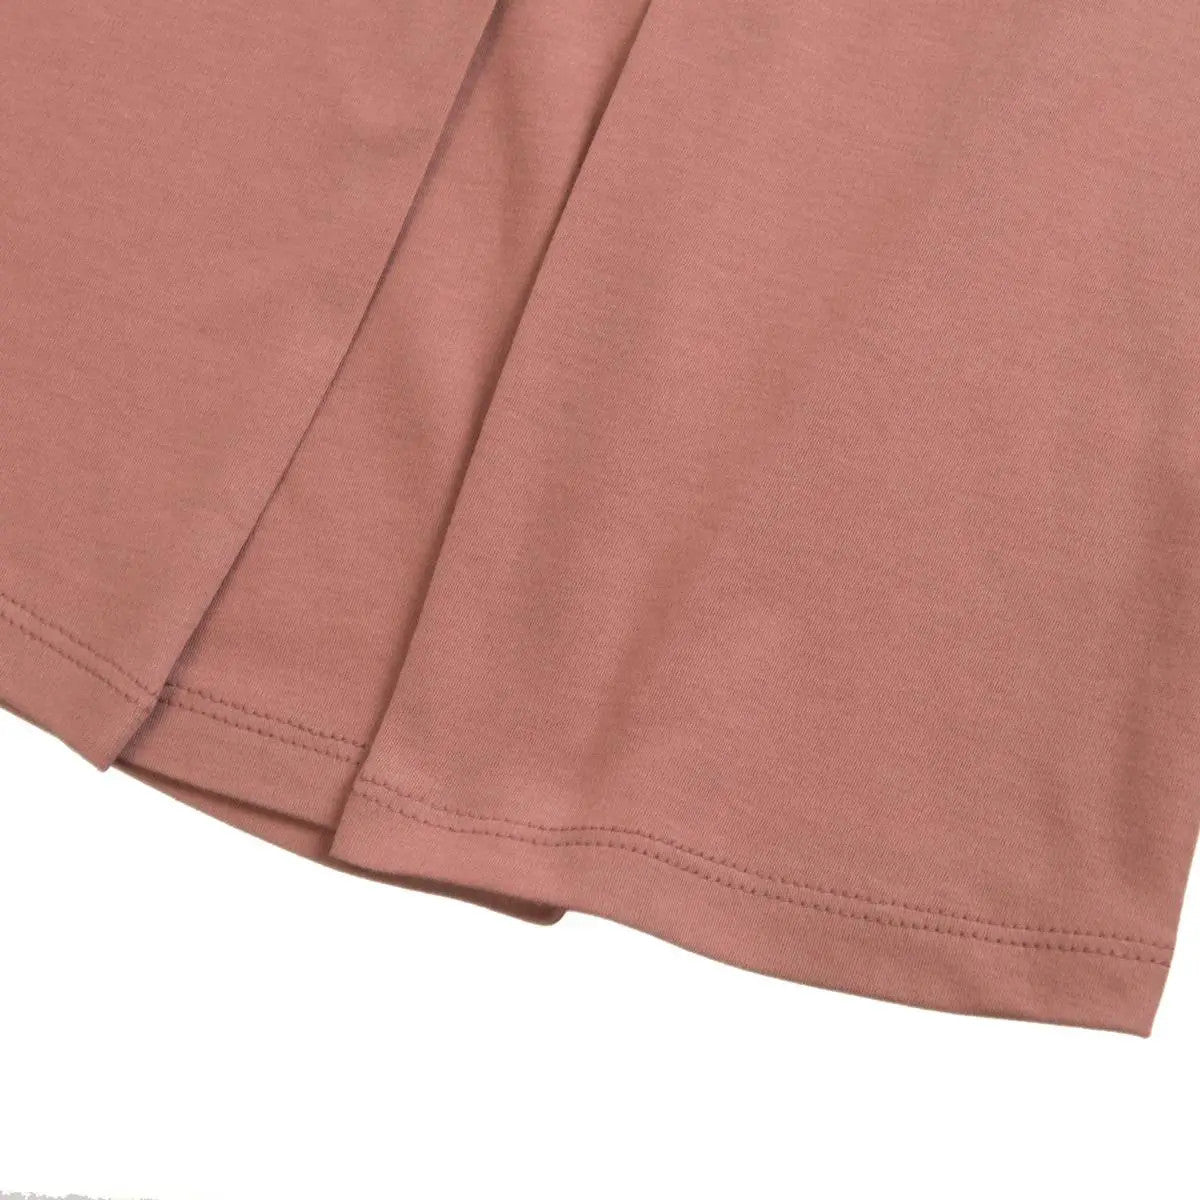 Little Hedonist organic cotton dress, short sleeve, knee length dress in Burlwood pink